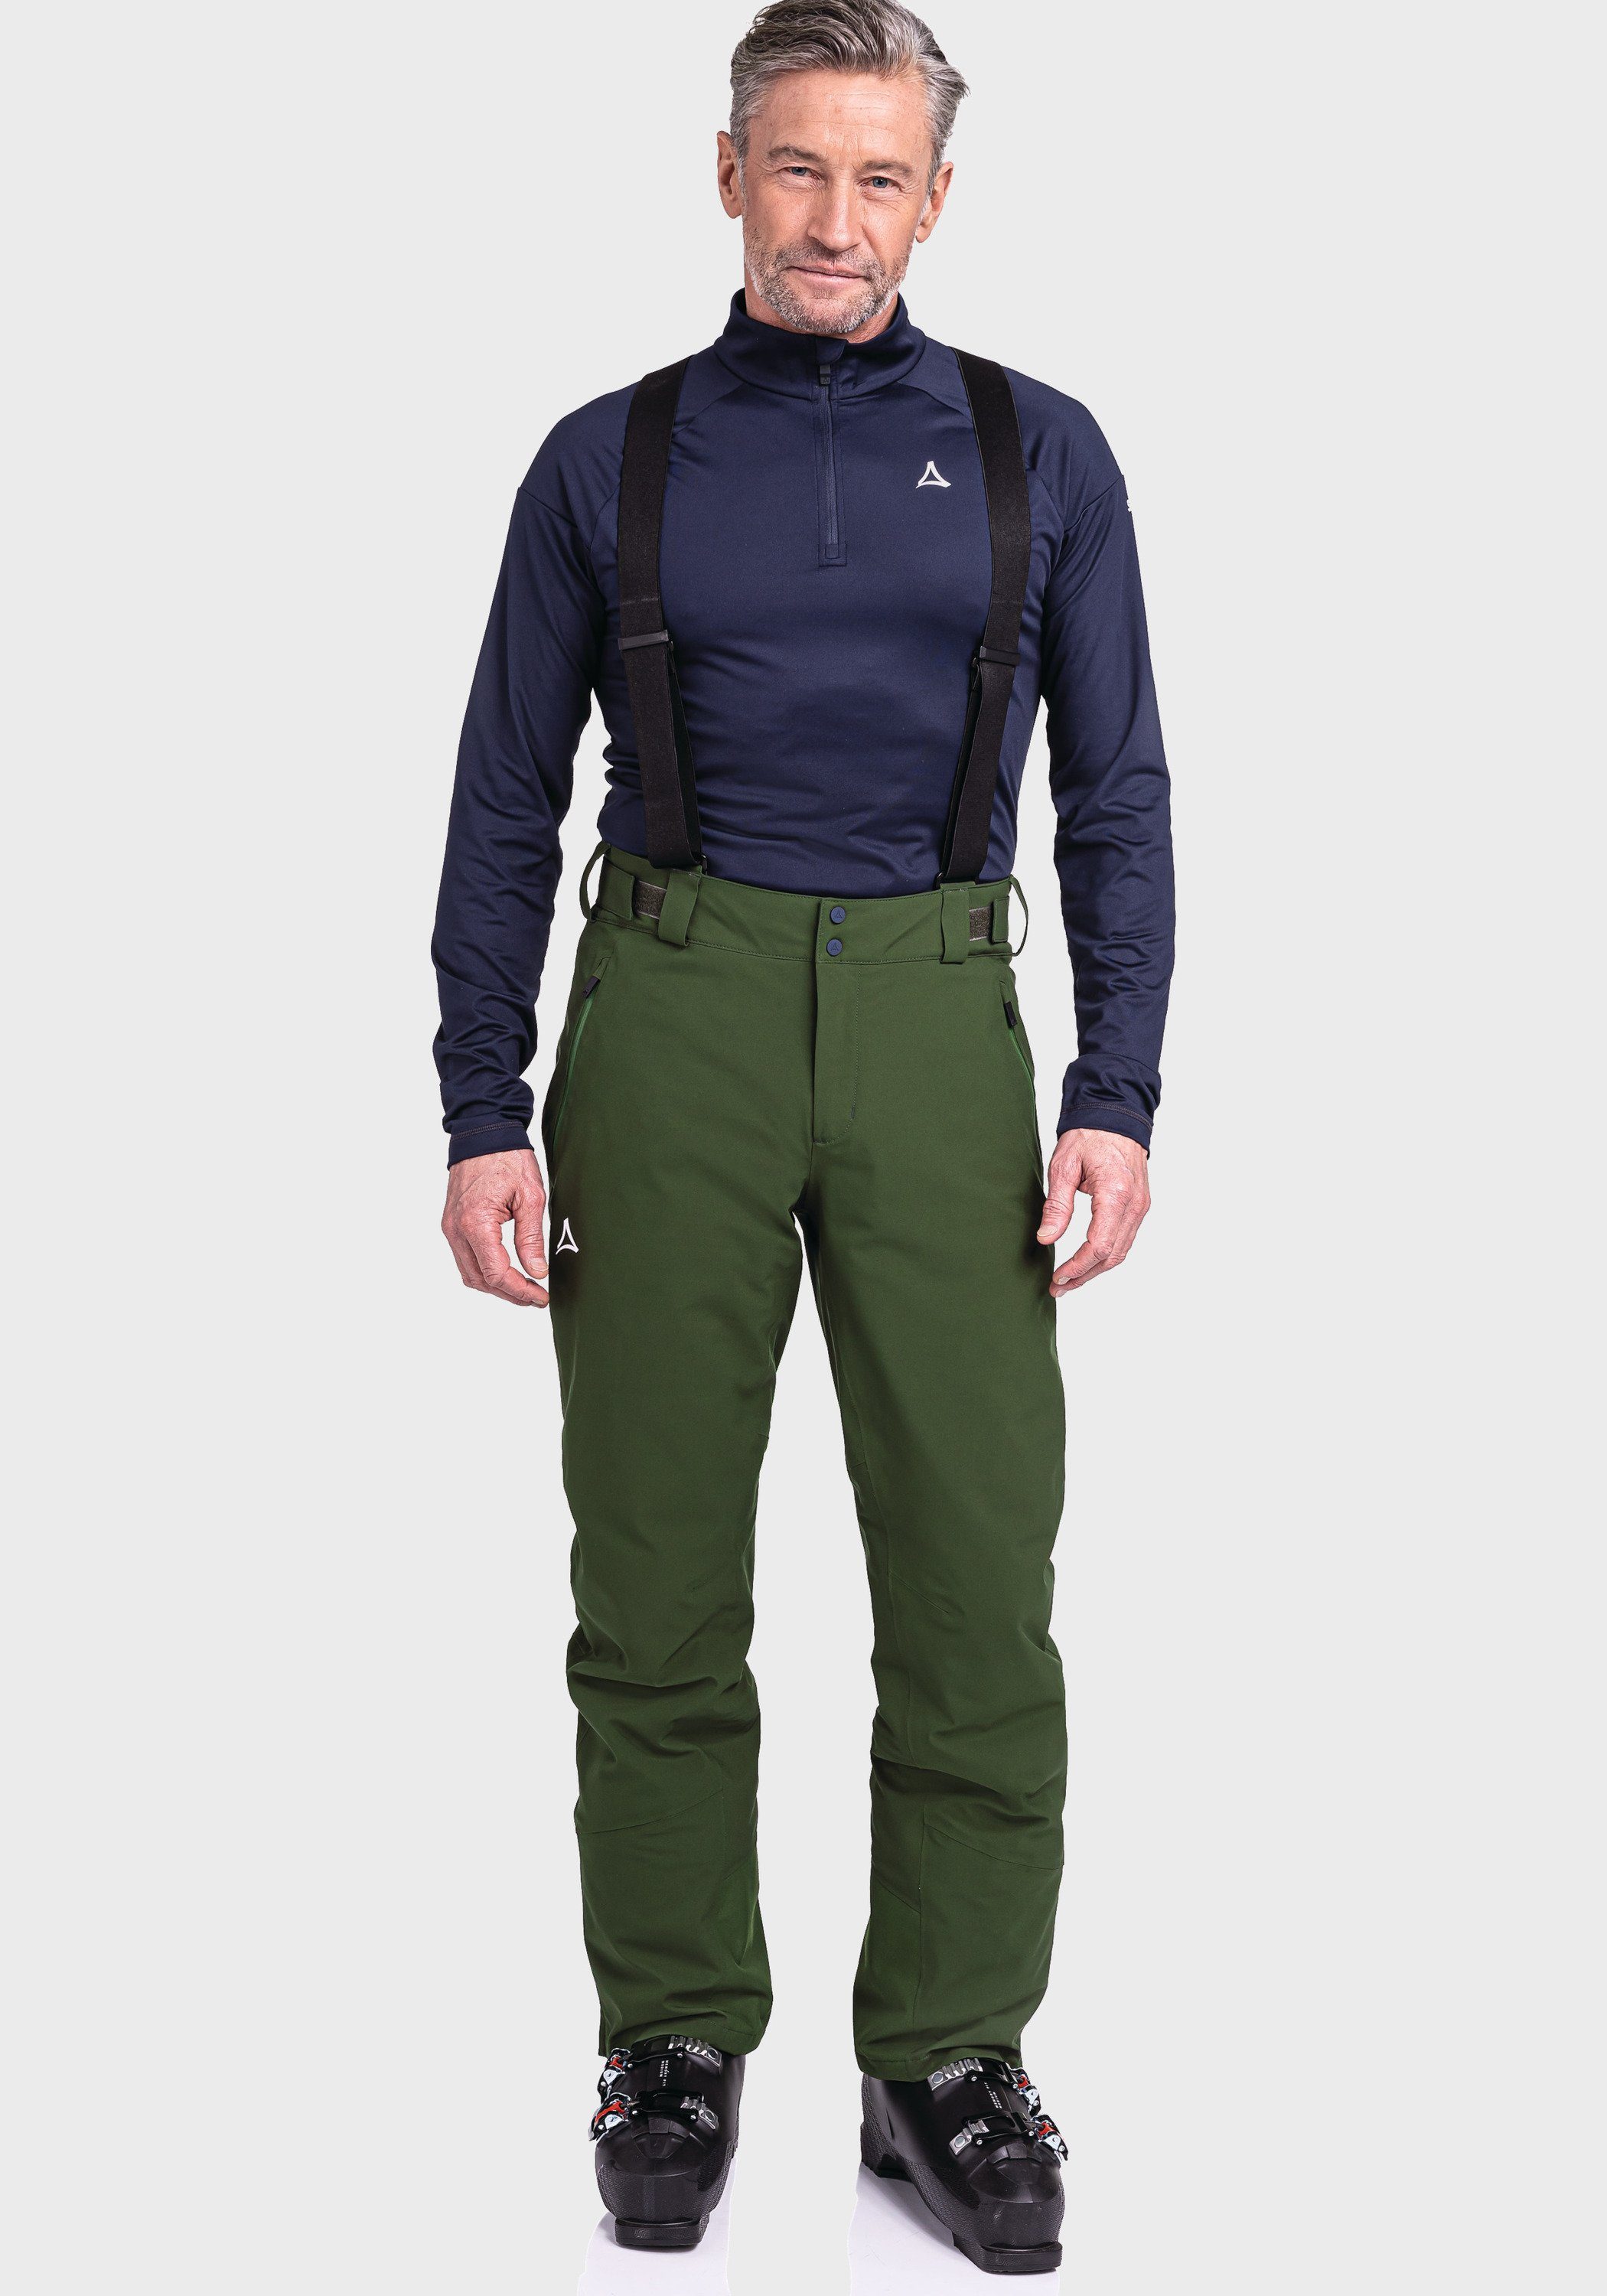 Schöffel Latzhose grün M Weissach Ski Pants